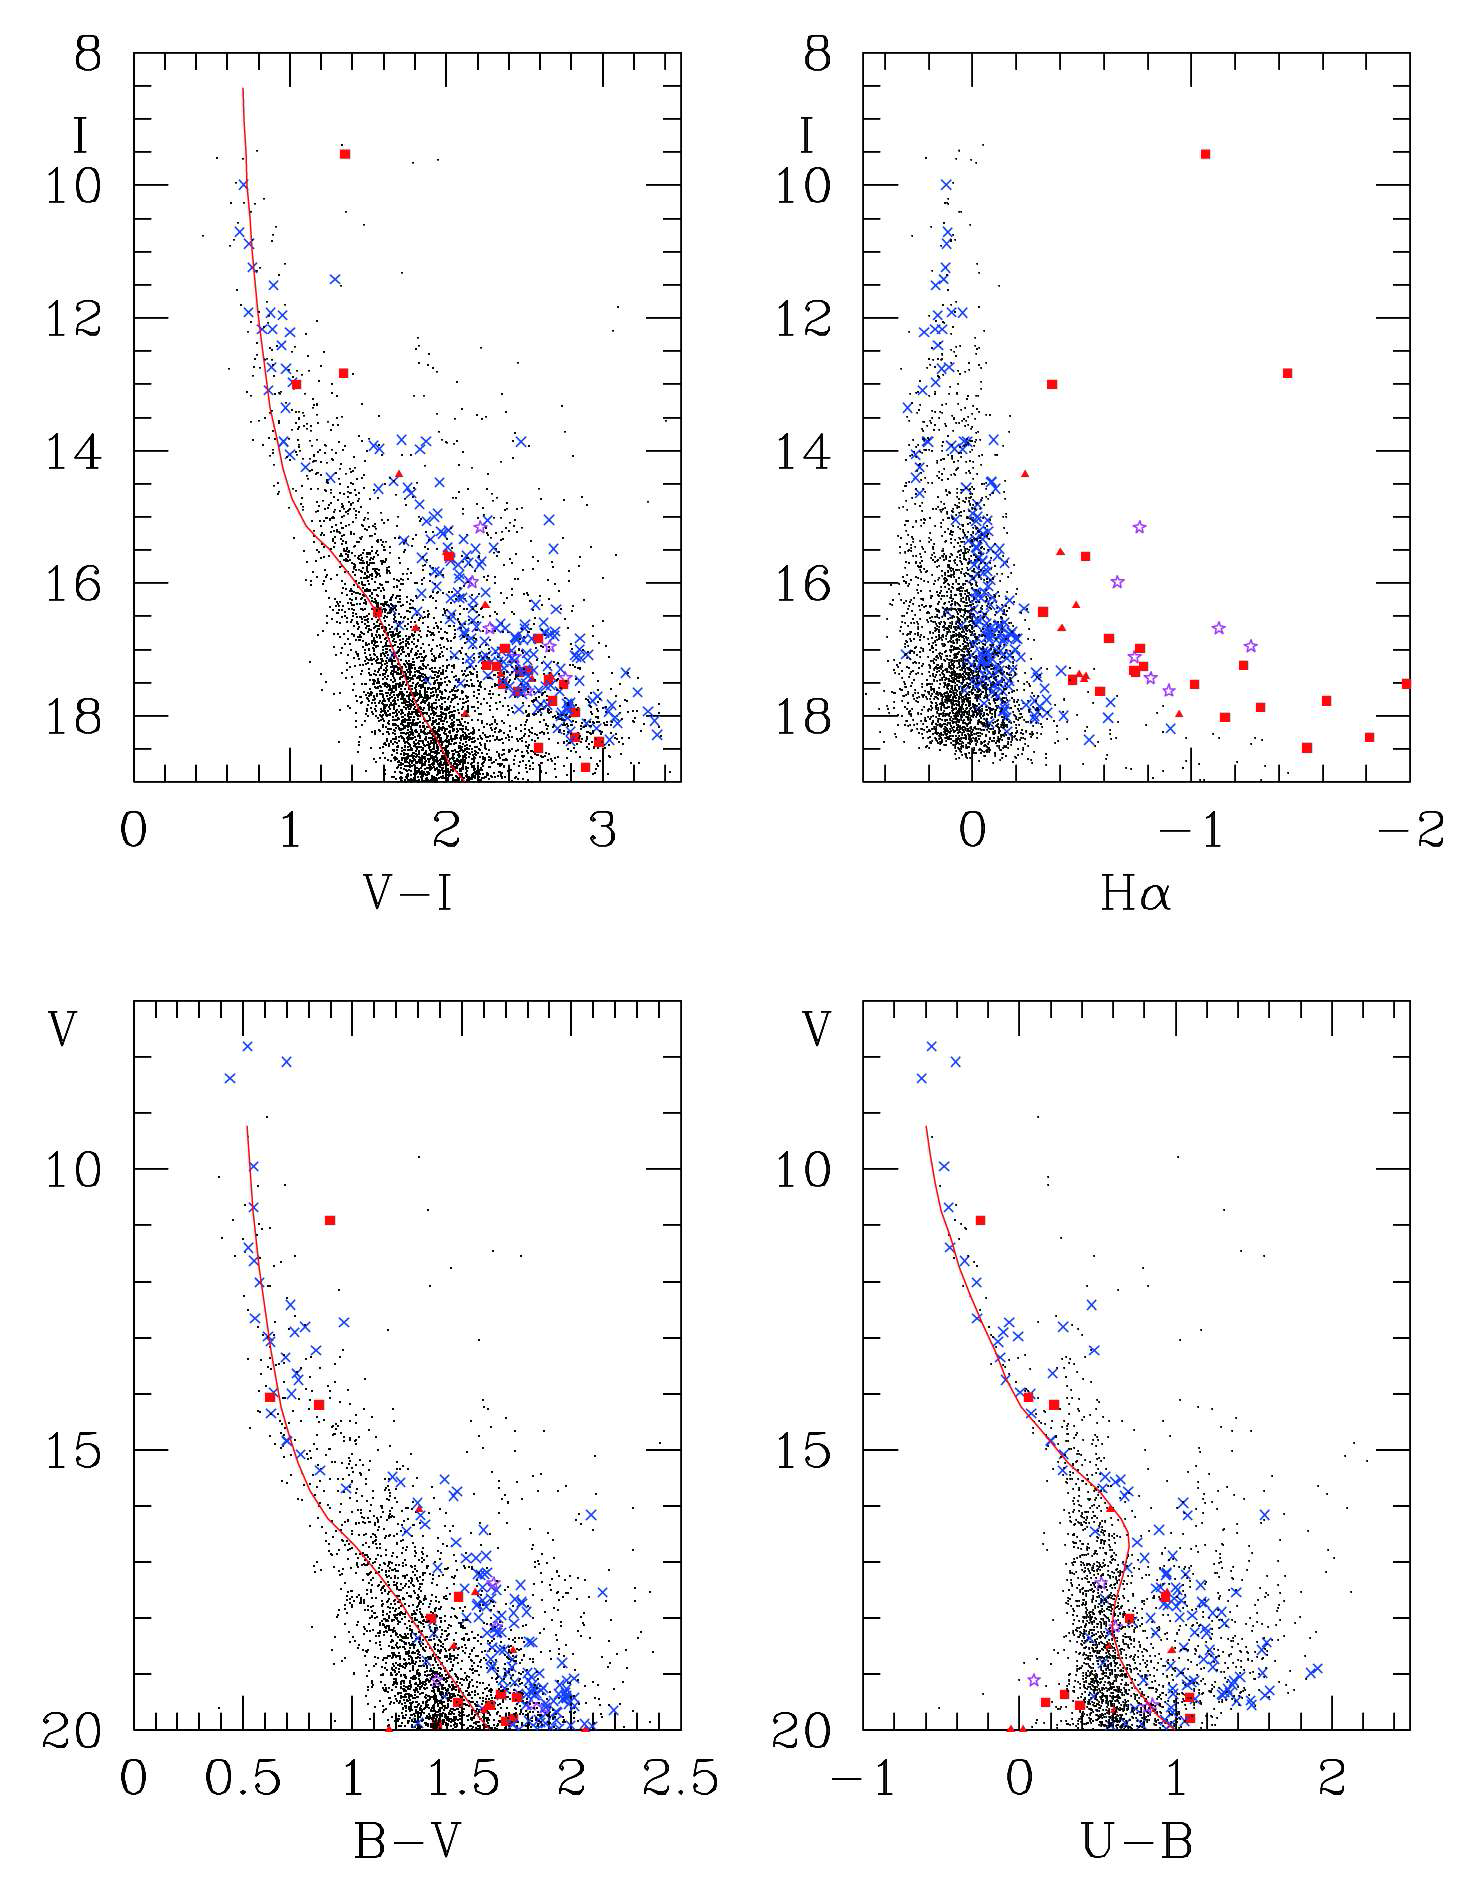 Mai danak 천문대 AZT- 22 1. 5m 망원경과 Fai r chi l d 486 CCD로 관측한 I C 1805 중심부의 색- 등급도. 청색 X표는 X- 선 방출성을 나타내며, 빨간색 사각형과 삼각형은 각각 H 방출성과 방출성 후보를, 그리고 보라색 별표는 H 방출이 있는 X- 선 방출성을 나타낸다. 빨간색 실선은 성단의 평균 성간소광과 성단의 거리지수 11. 6등급을 적용한 영년주계열 관계이다.